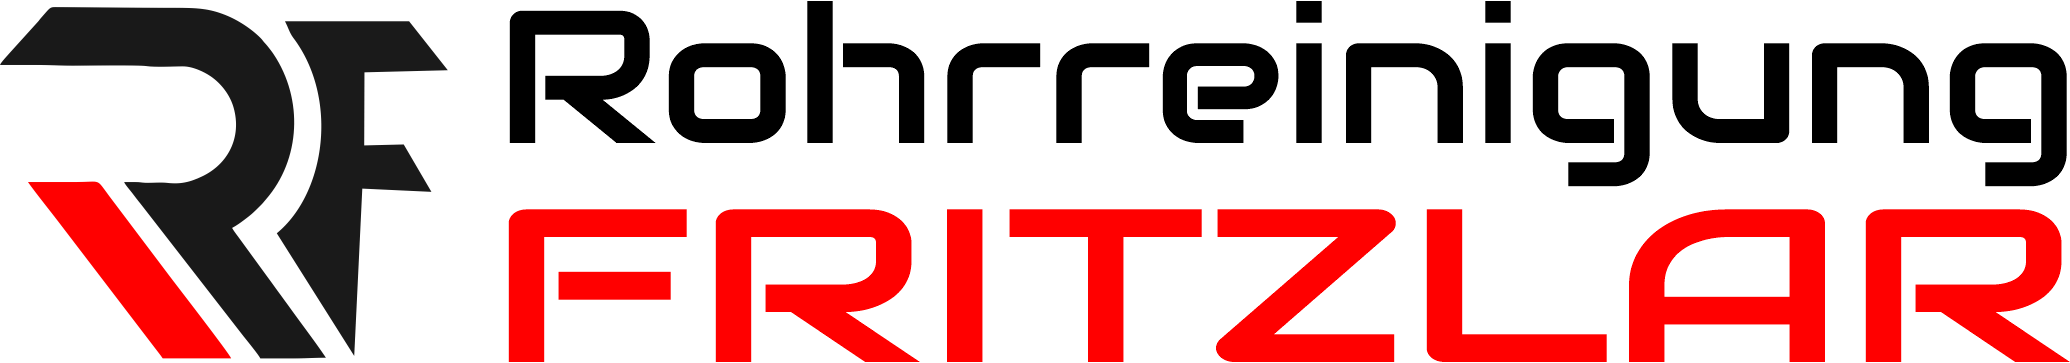 Rohrreinigung Fritzlar Logo